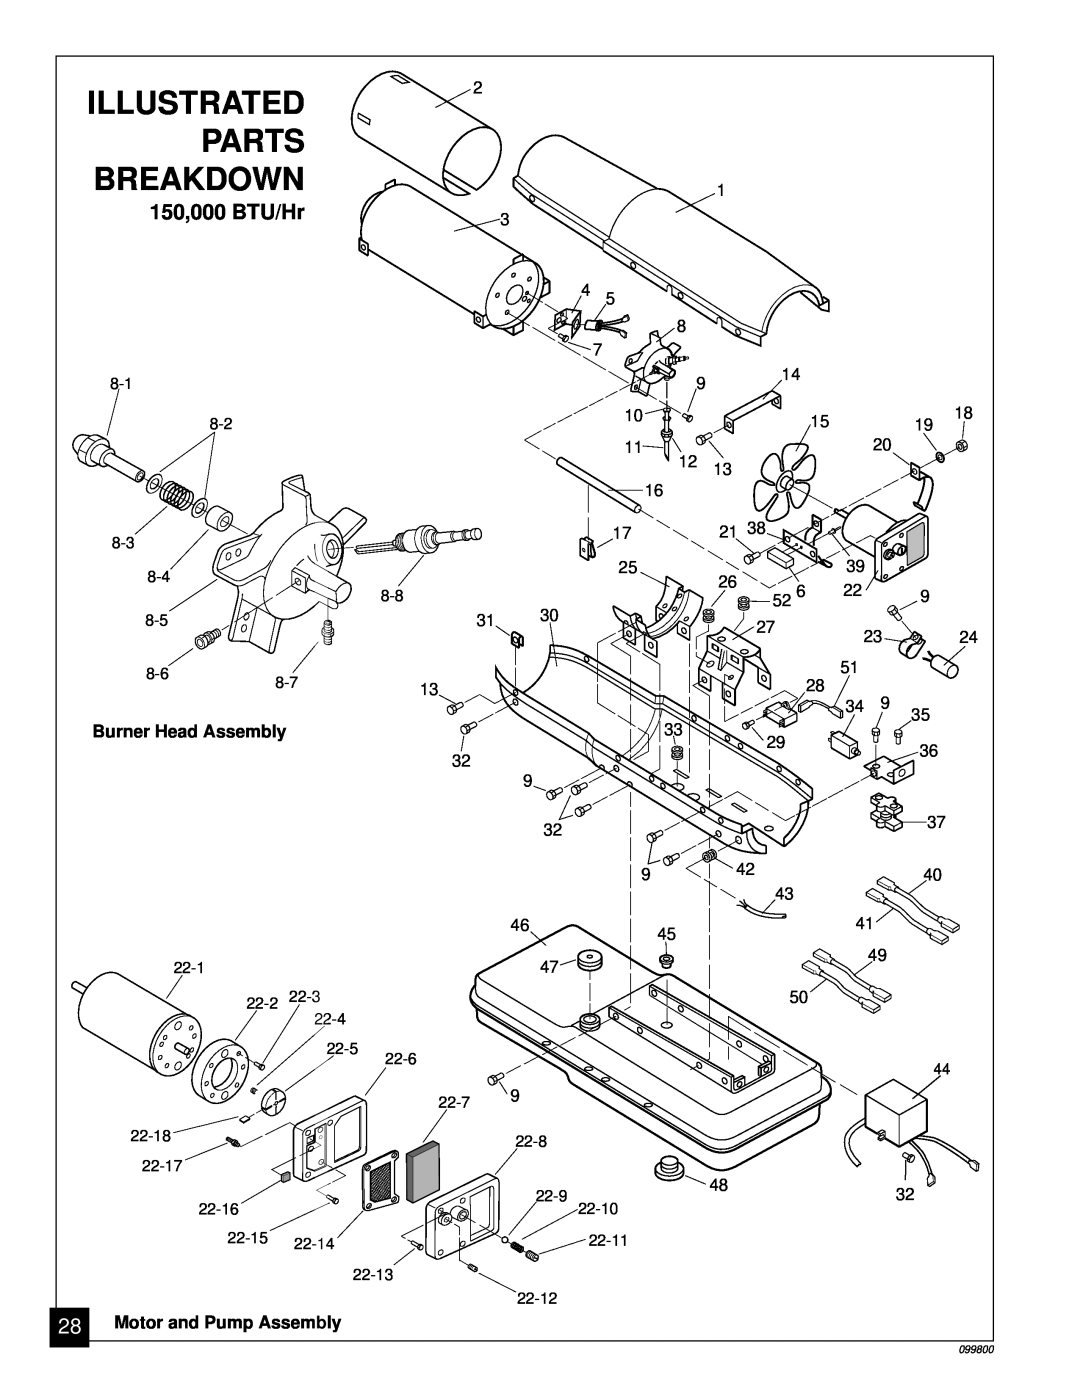 Desa PH30EDI, PH70EDI Illustrated, Parts, 150,000 BTU/Hr, Breakdown, Burner Head Assembly, 28Motor and Pump Assembly 